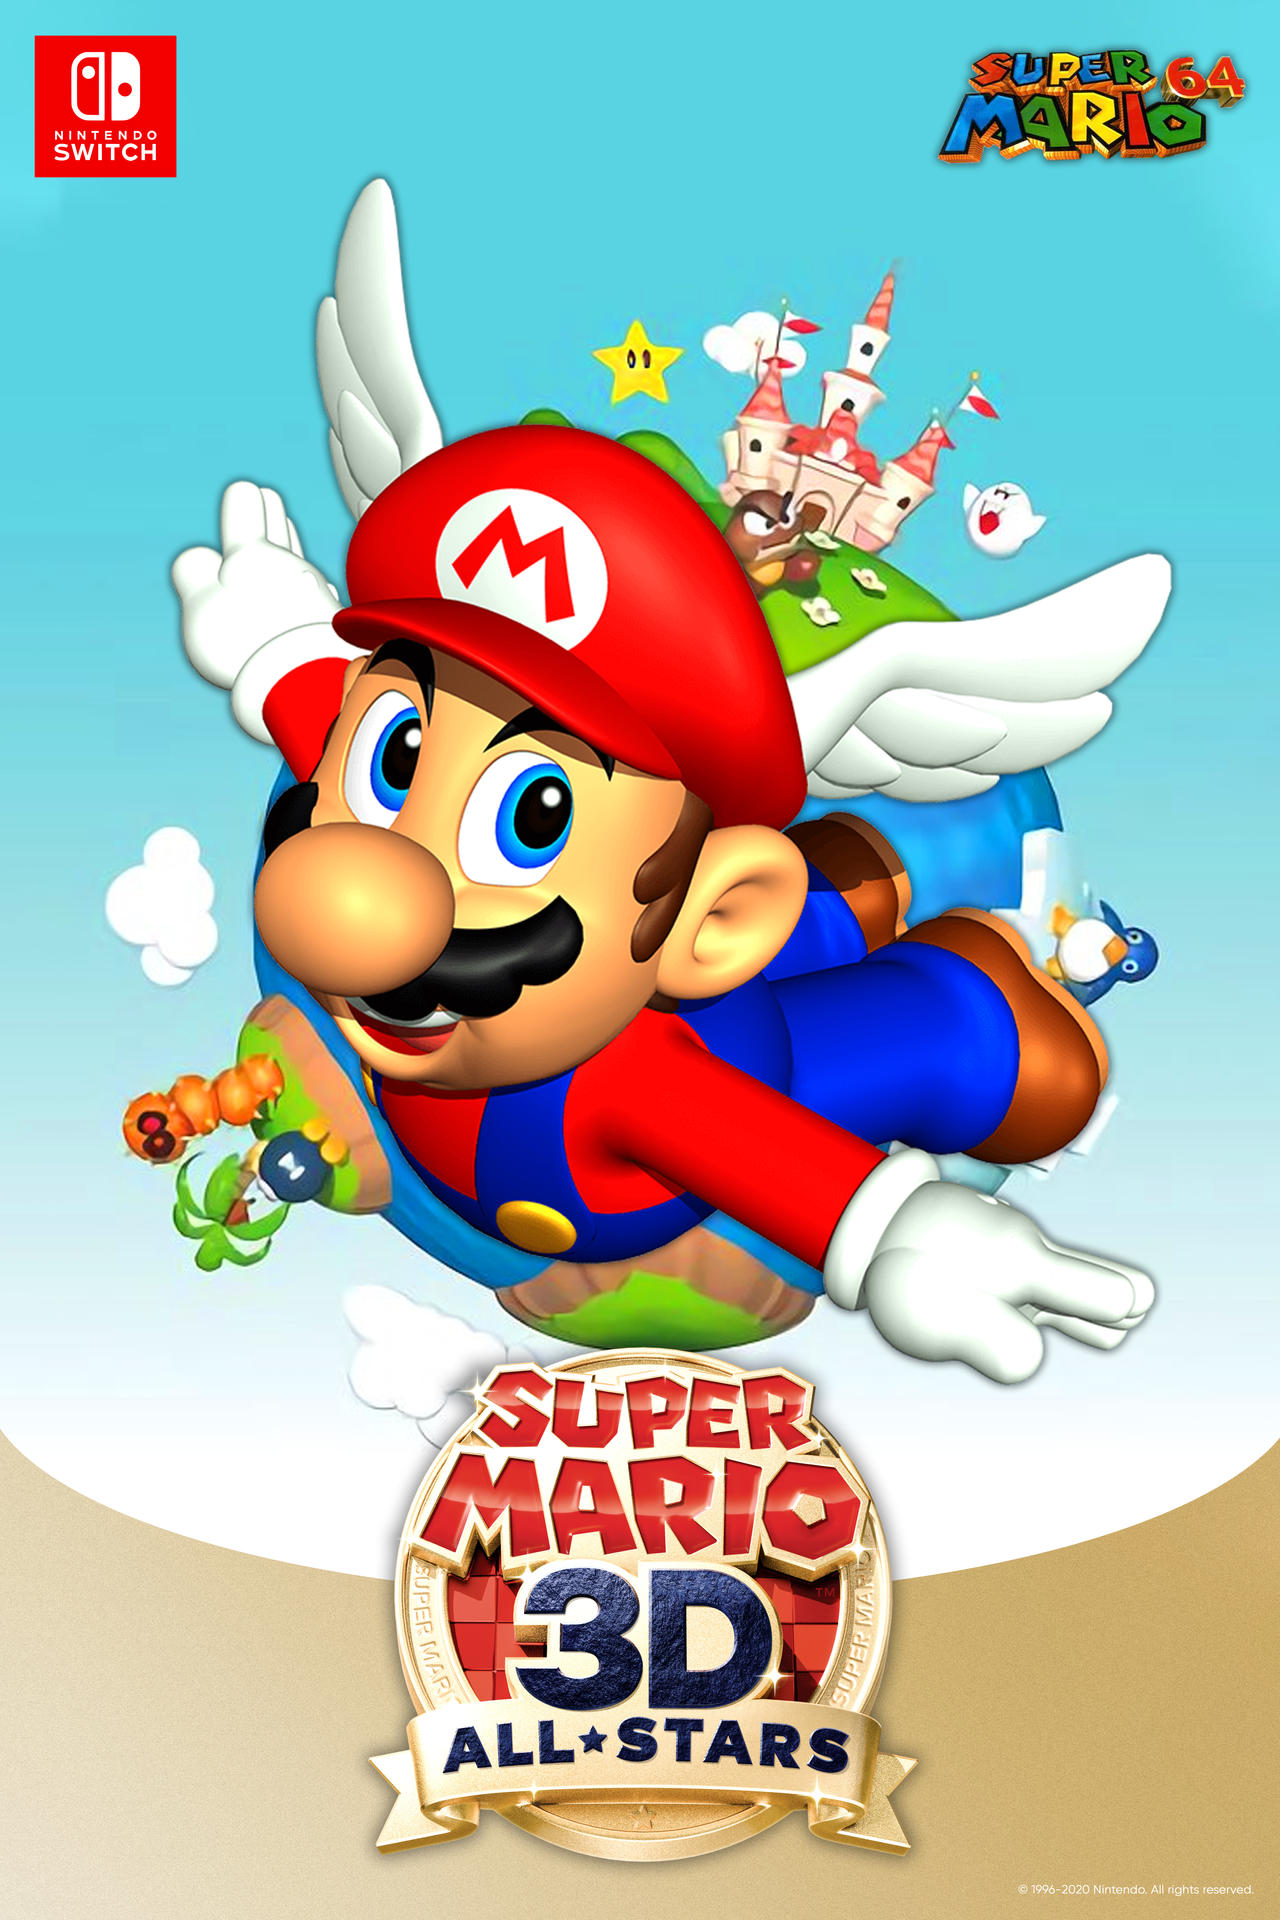 Super Mario 3D All-Stars : Super Mario 64 by SunsetDriver777 on DeviantArt